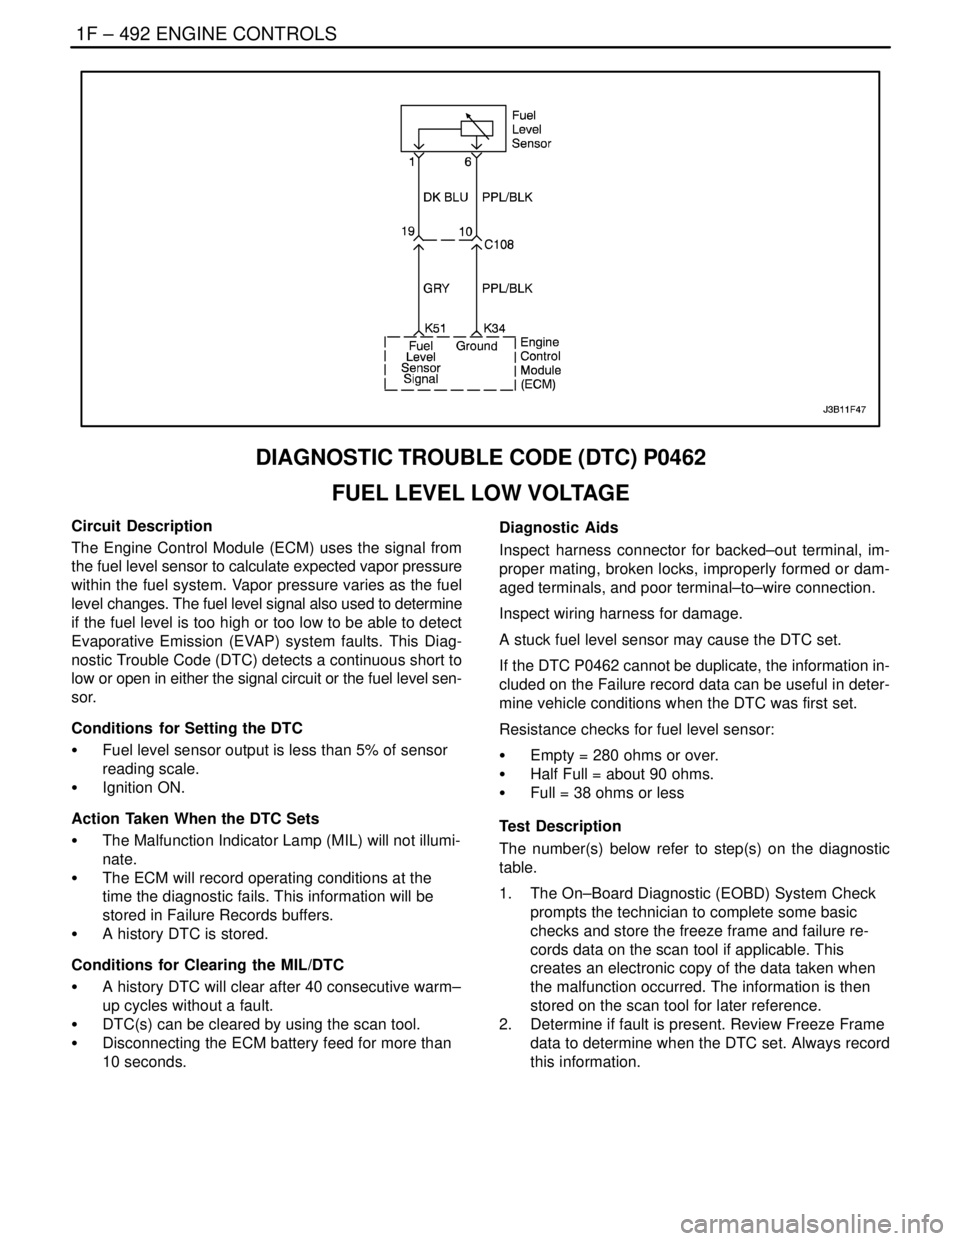 DAEWOO LACETTI 2004  Service Repair Manual 1F – 492IENGINE CONTROLS
DAEWOO V–121 BL4
DIAGNOSTIC TROUBLE CODE (DTC) P0462
FUEL LEVEL LOW VOLTAGE
Circuit Description
The Engine Control Module (ECM) uses the signal from
the fuel level sensor 